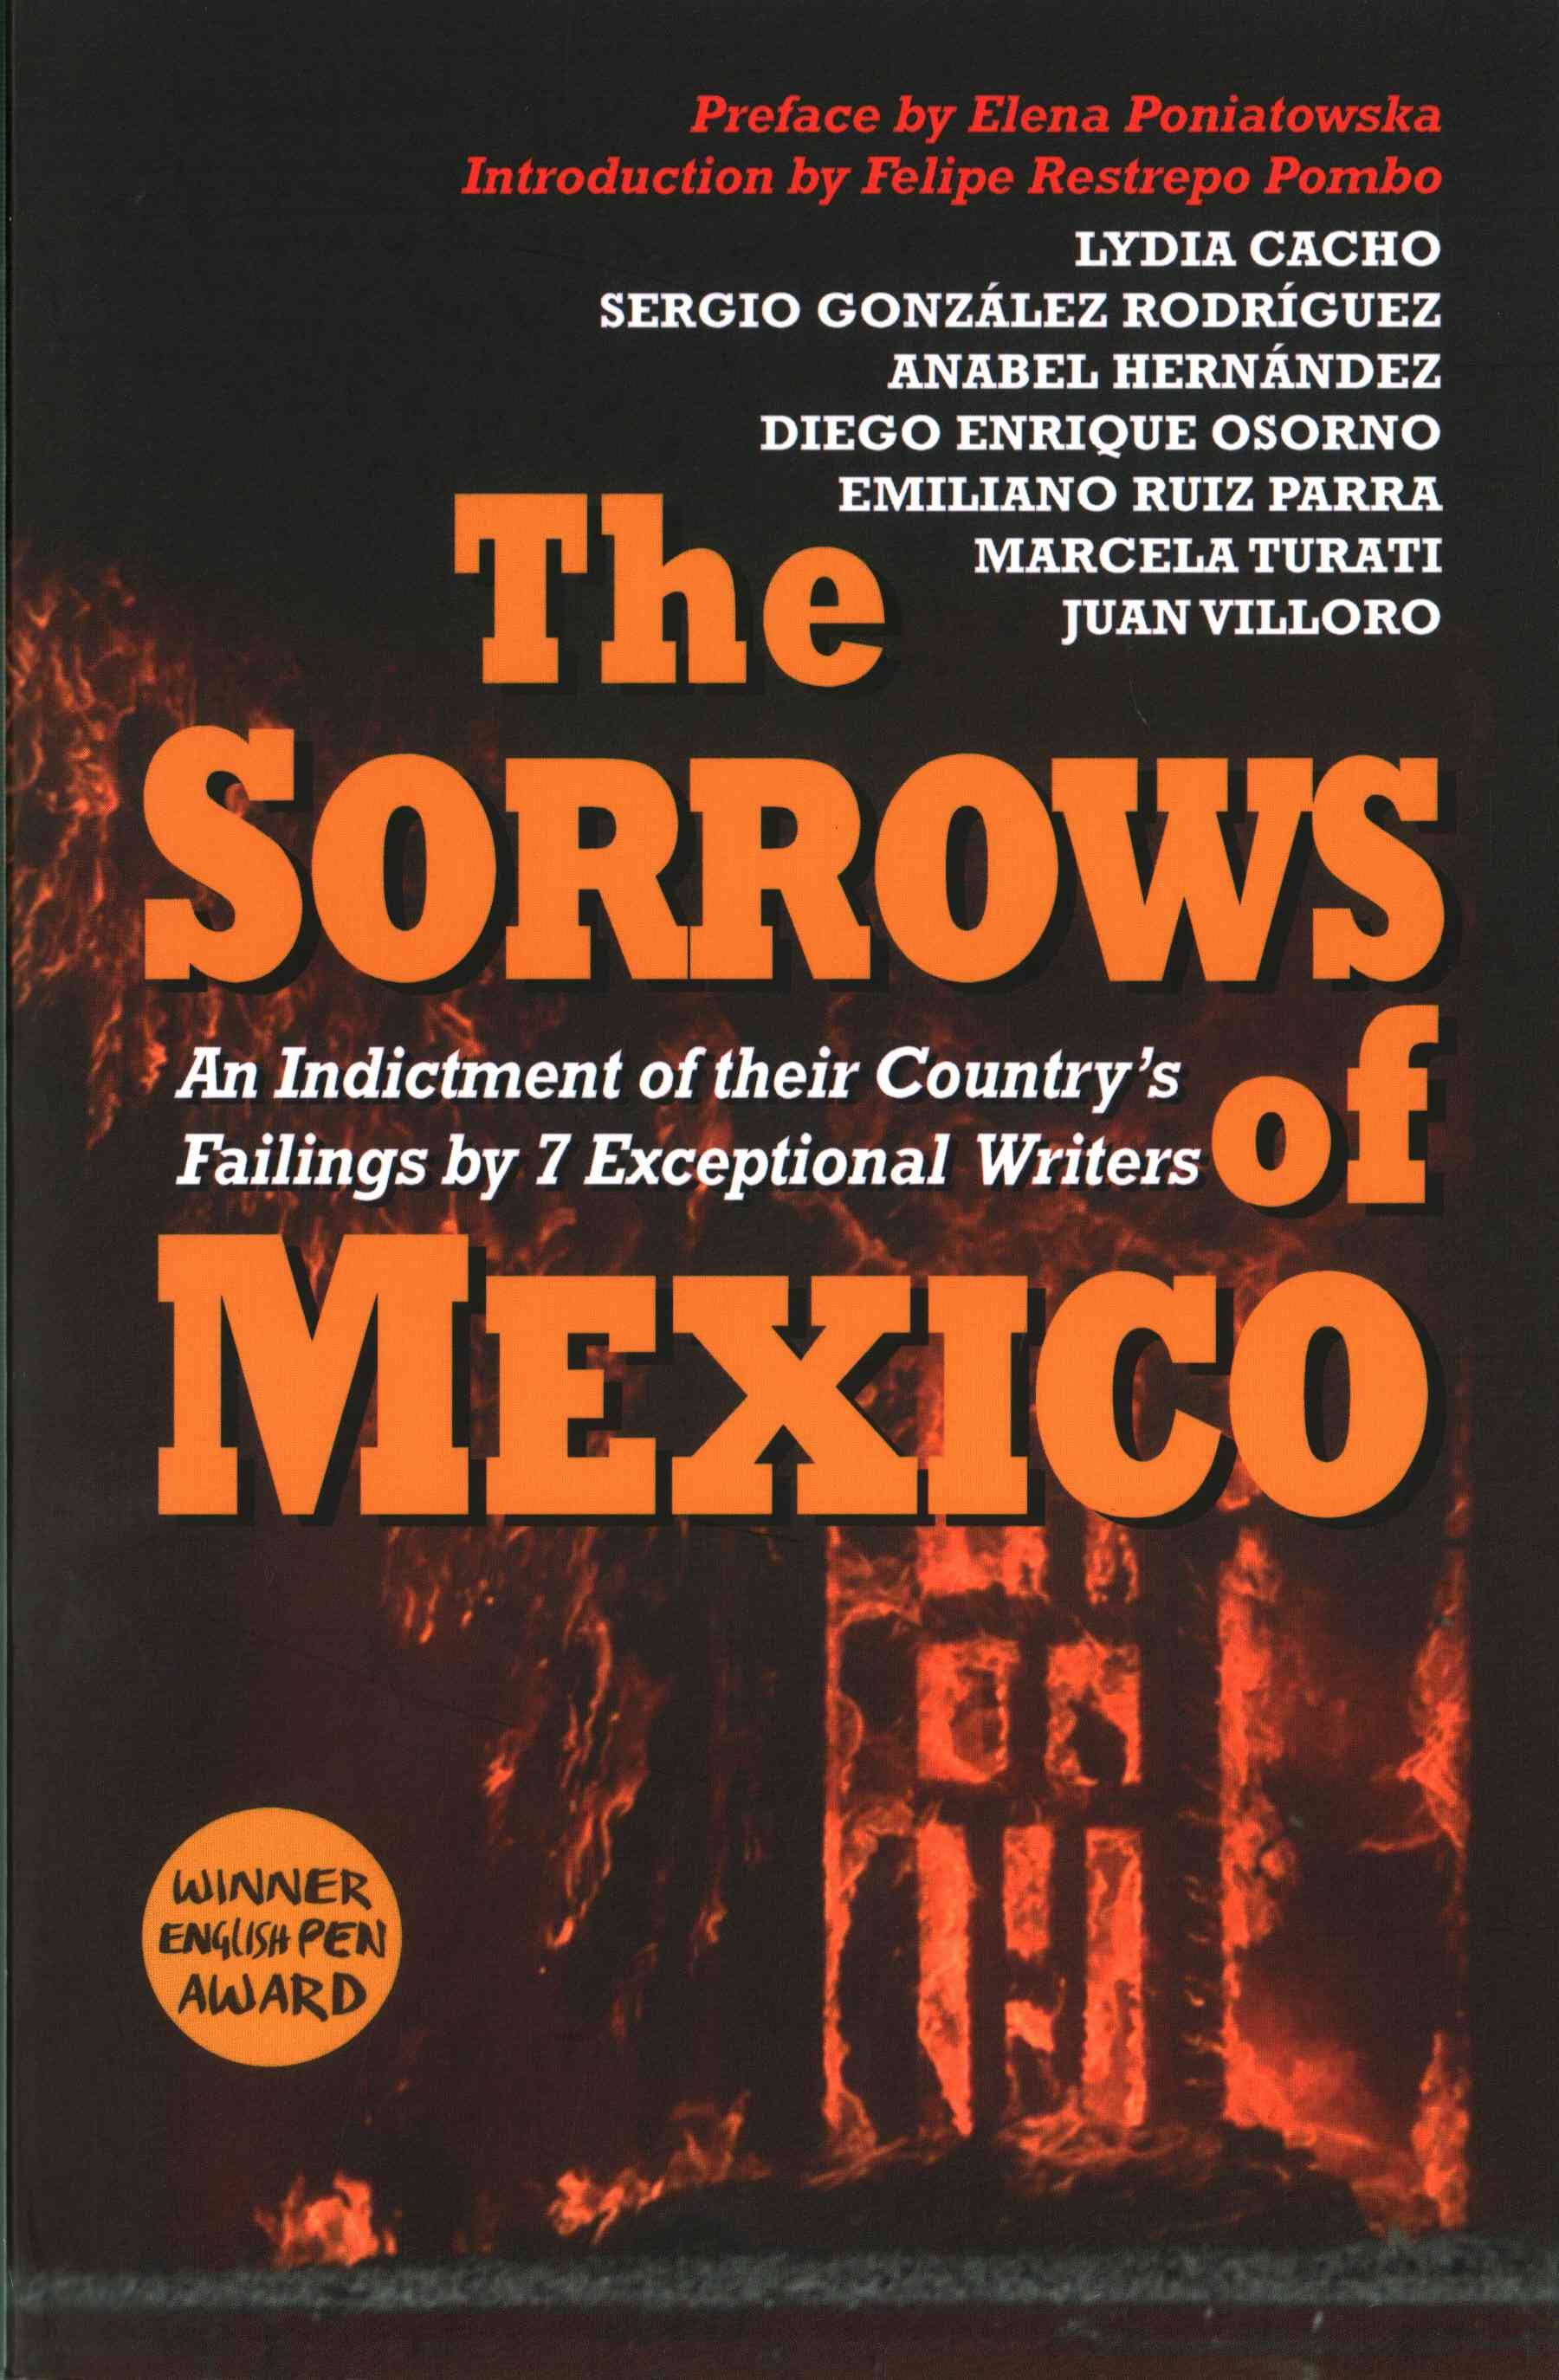 Lydia Cacho, The sorrows of Mexico (2017) Maclehose press, English, ISBN: 9780857056221